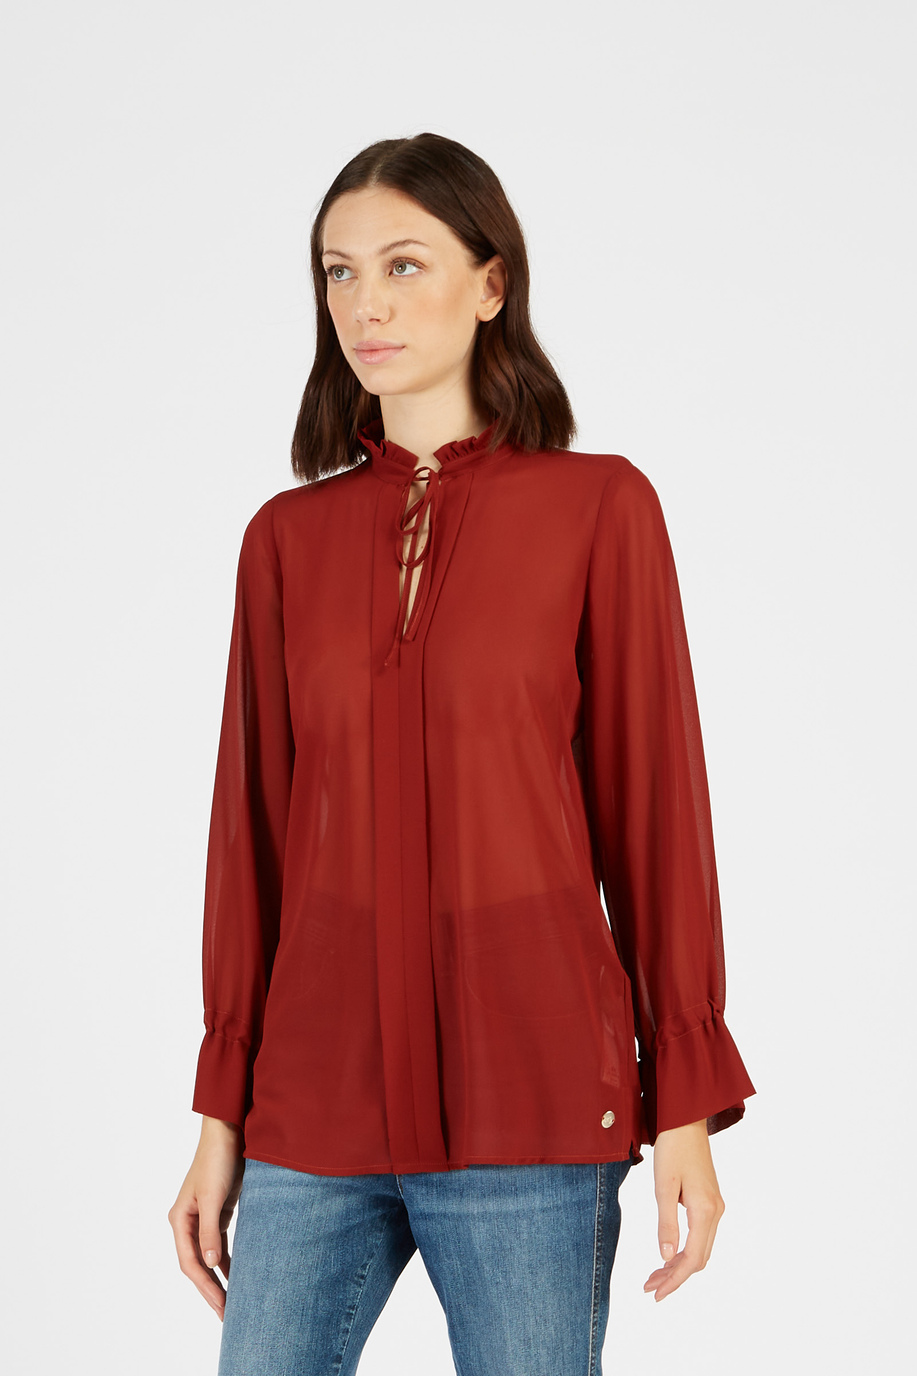 Women’s shirt Argentina fabric georgette regular fit long sleeves - Autumn style | La Martina - Official Online Shop